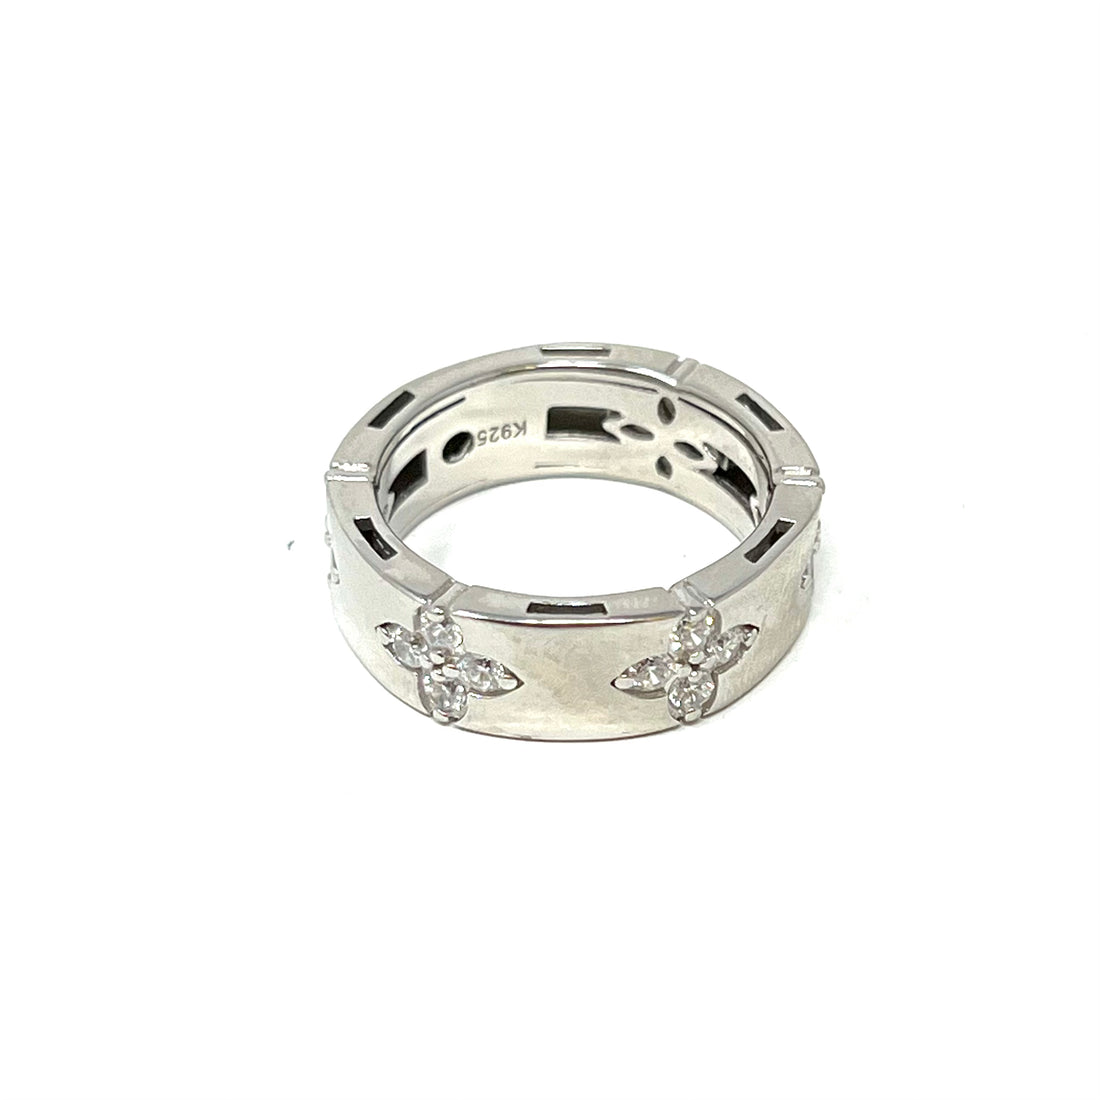 Liz Fleur Pave Ring in Silver